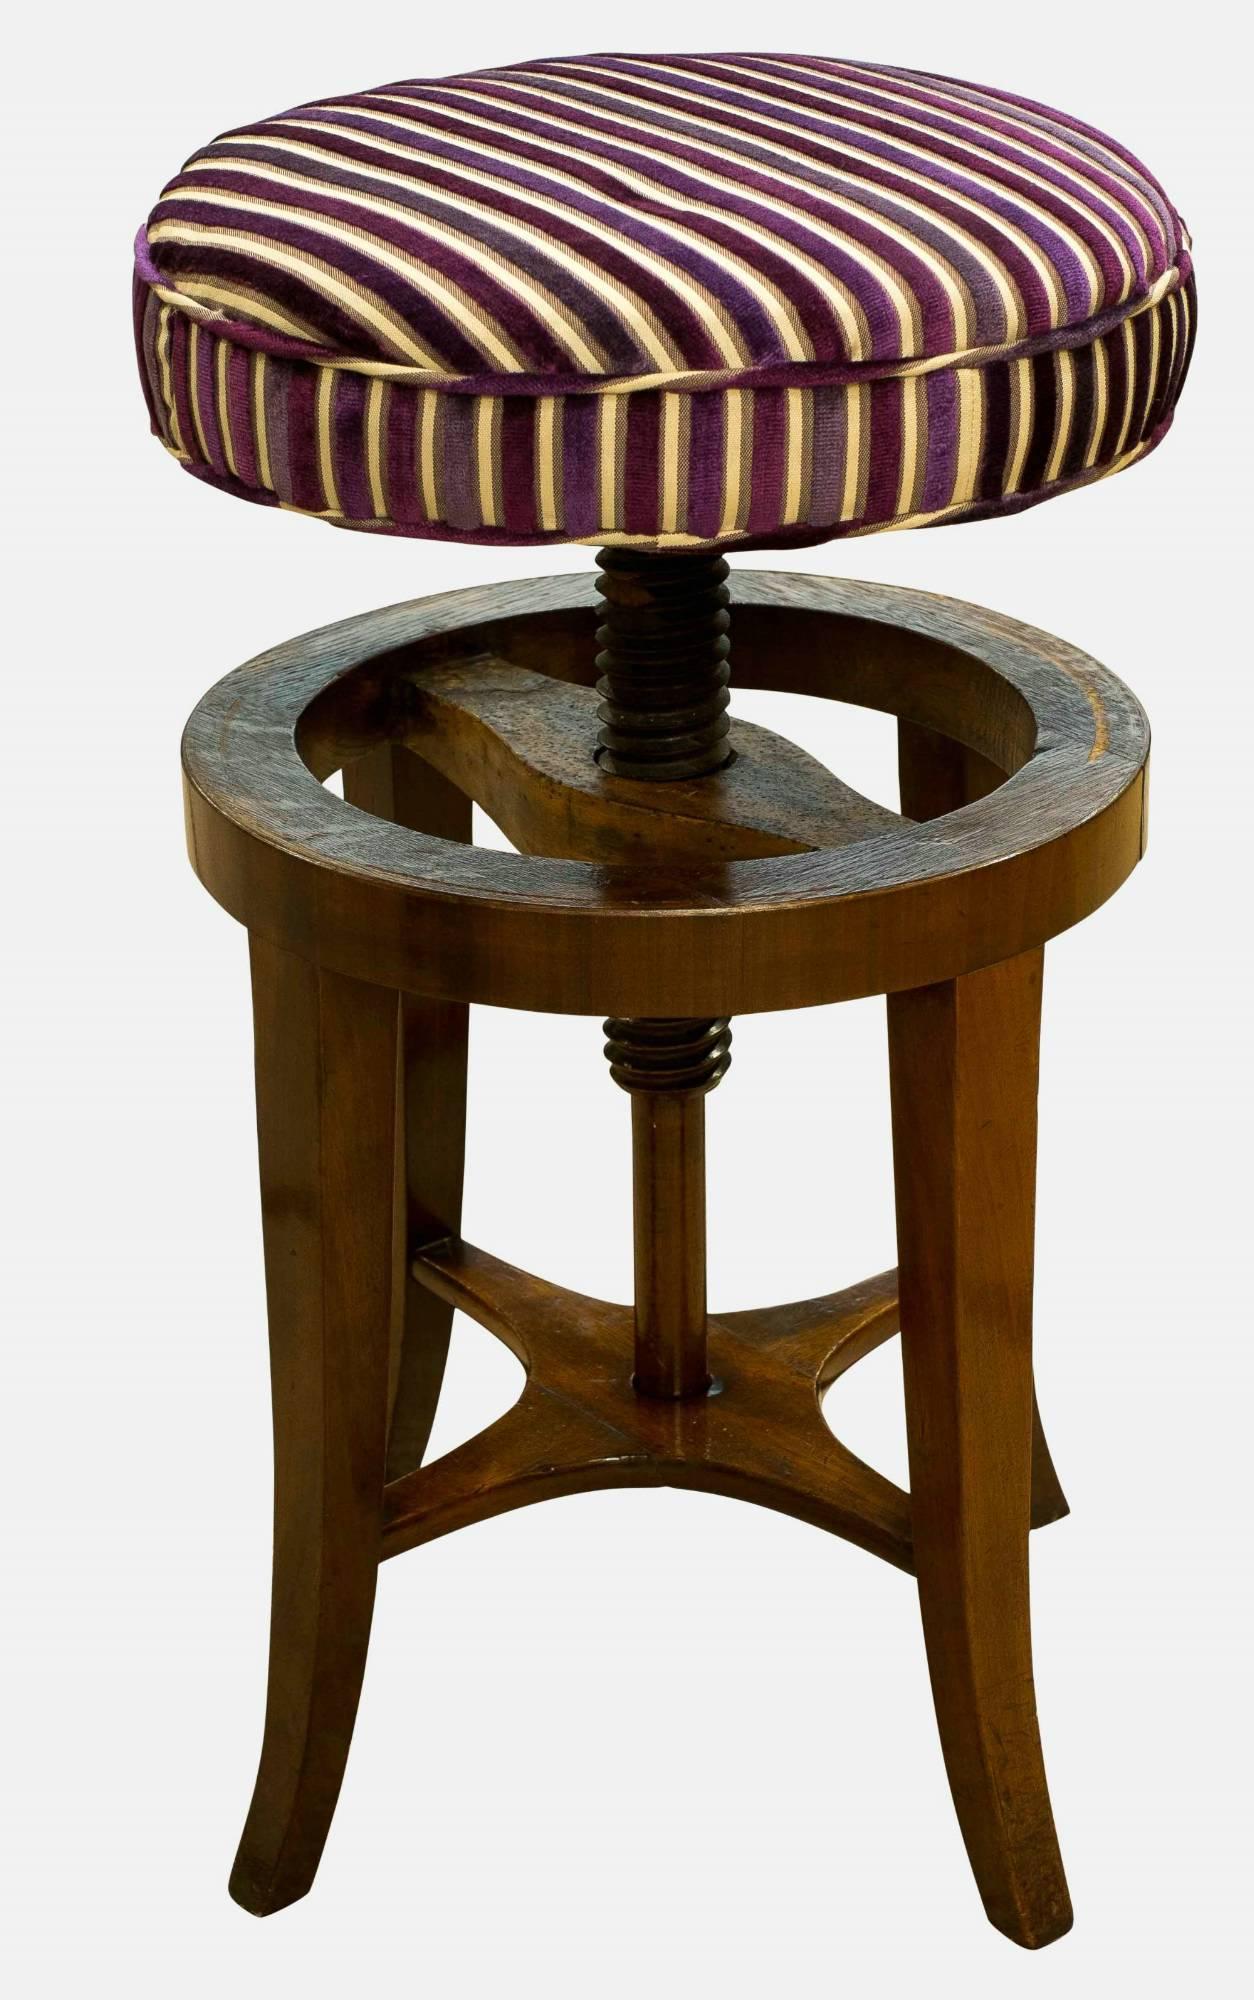 A Regency mahogany revolving music stool raised on sabre supports

circa 1815.